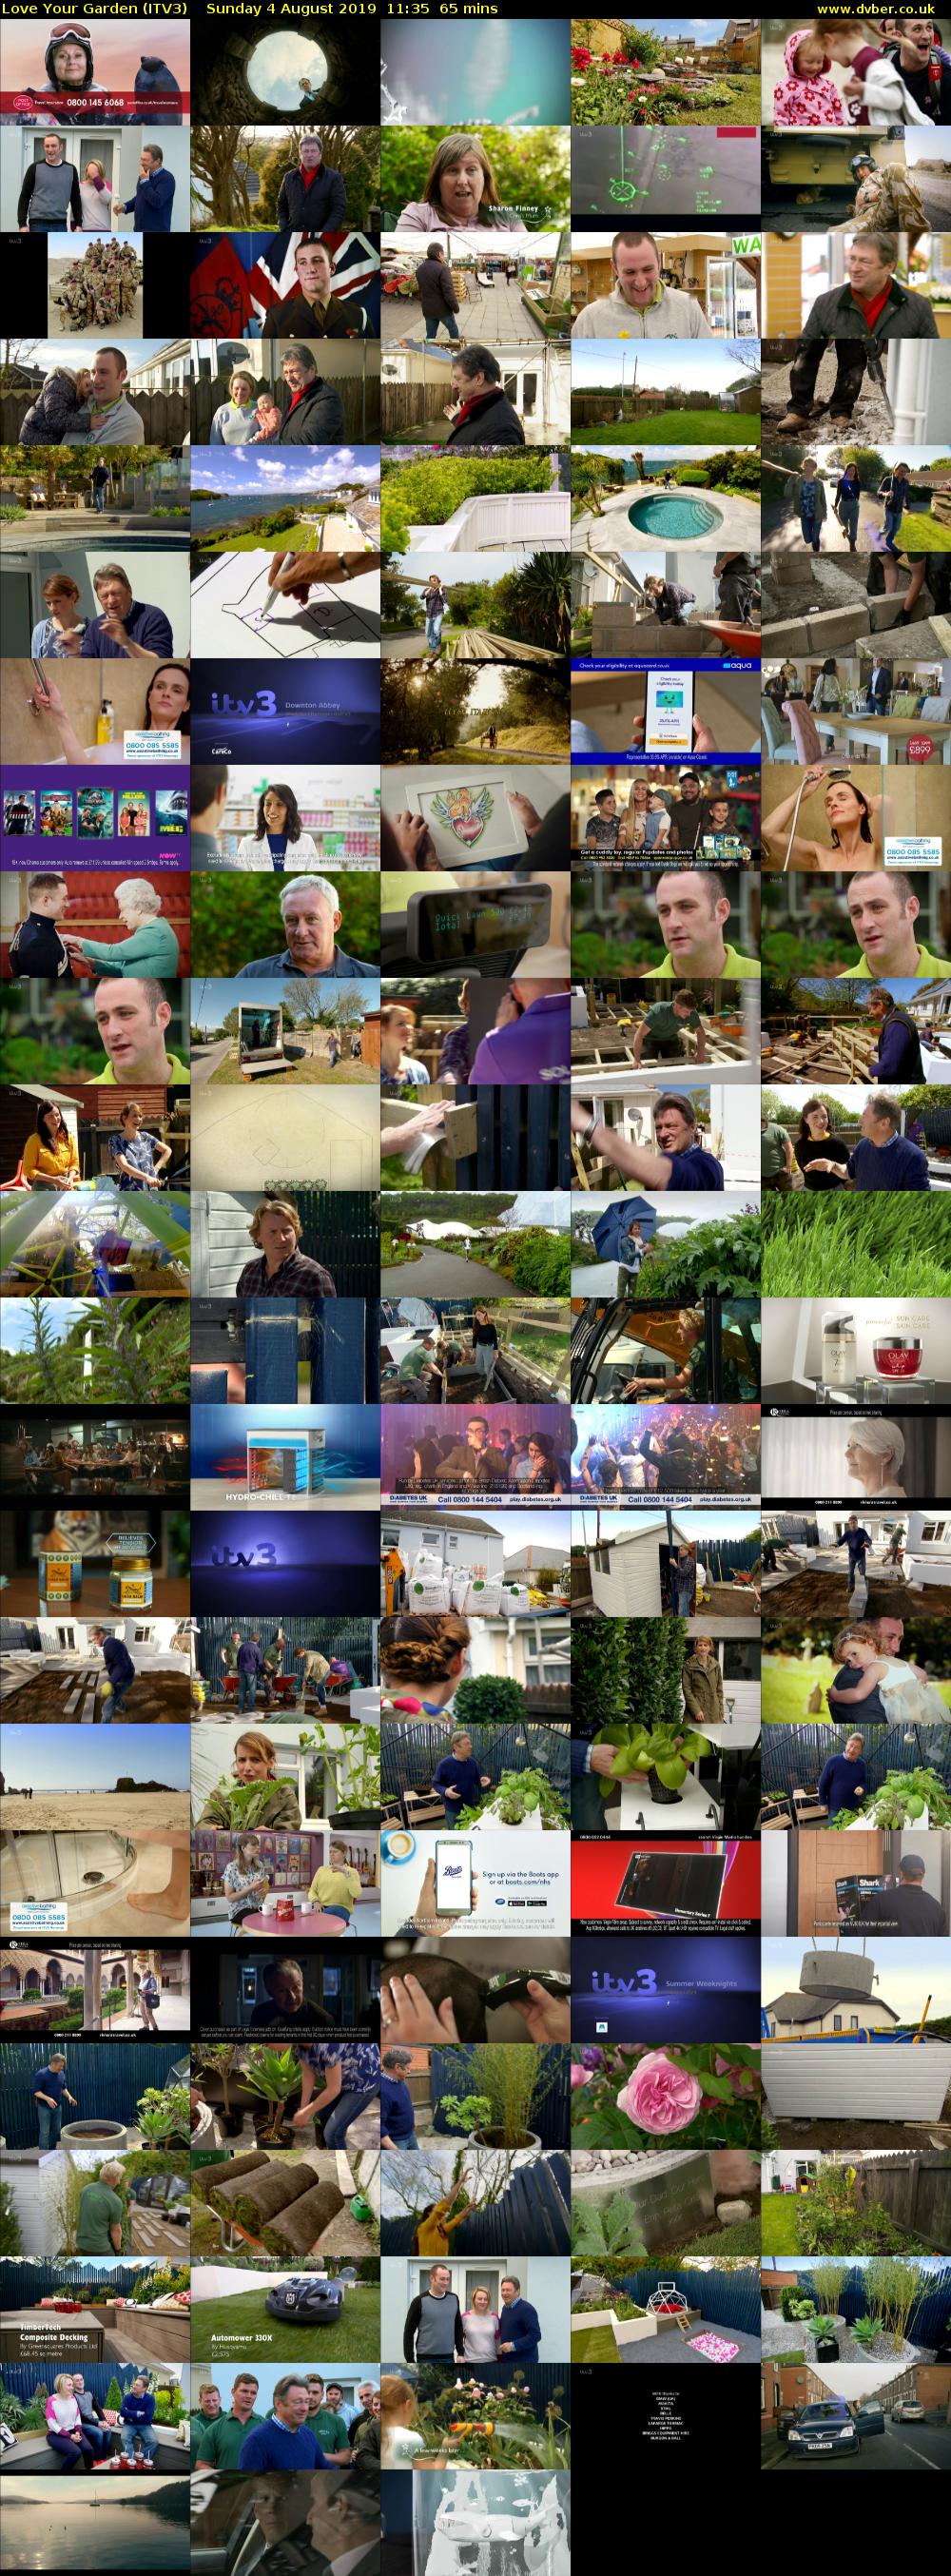 Love Your Garden (ITV3) Sunday 4 August 2019 11:35 - 12:40